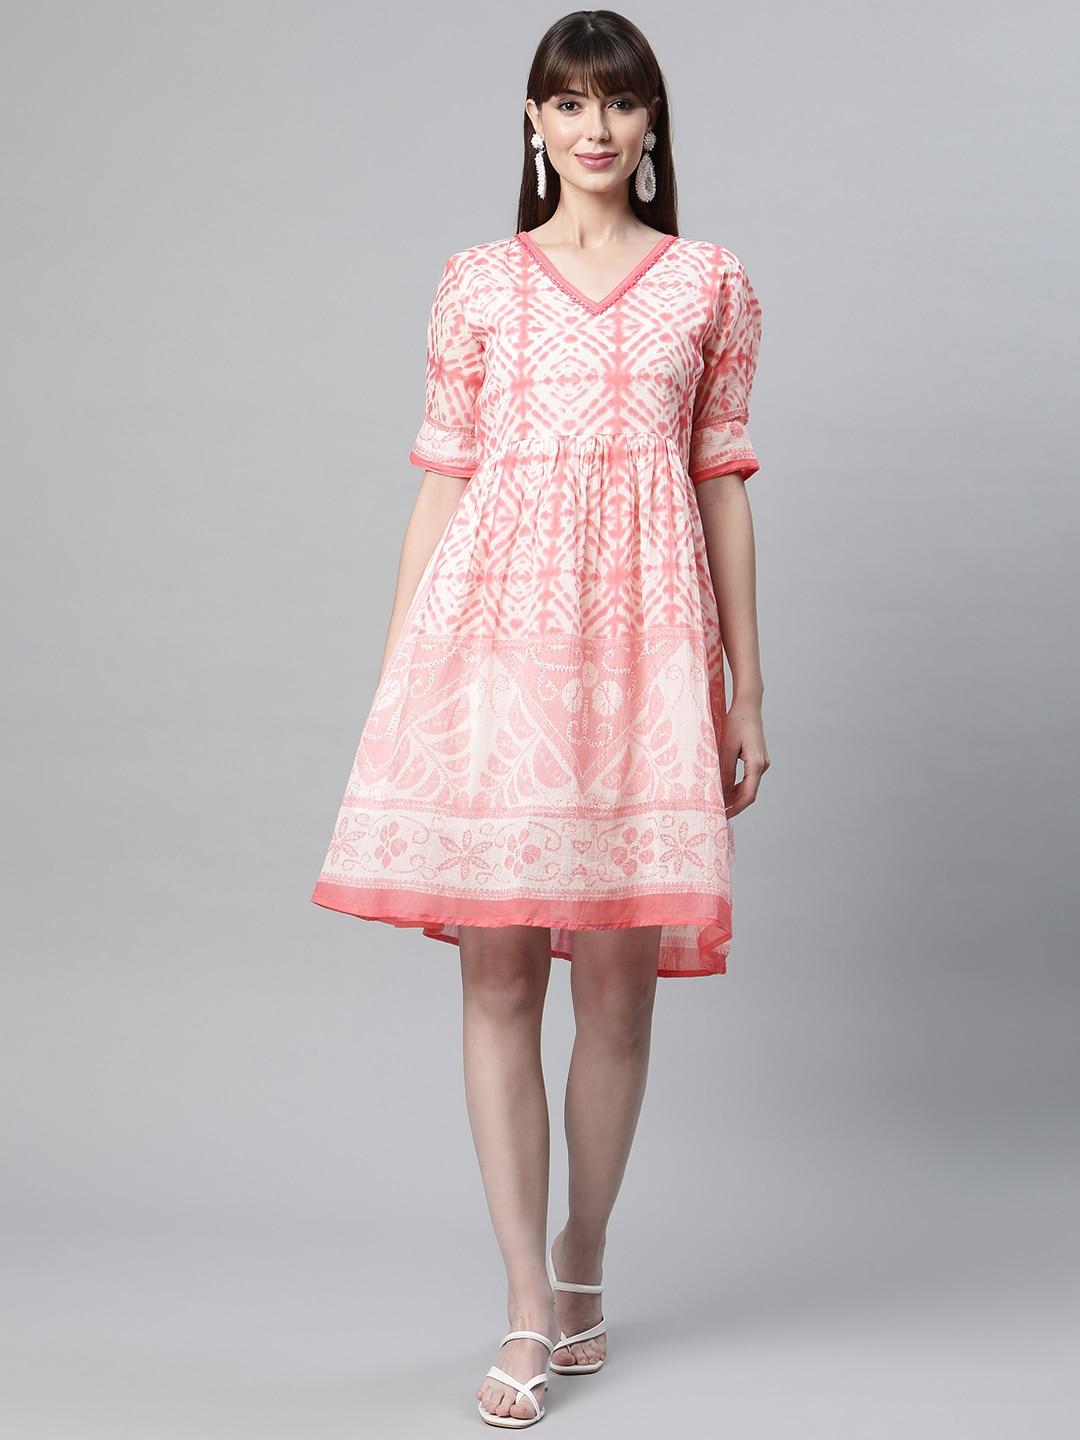 readiprint-fashions-pink-&-white-tie-and-dye-a-line-dress